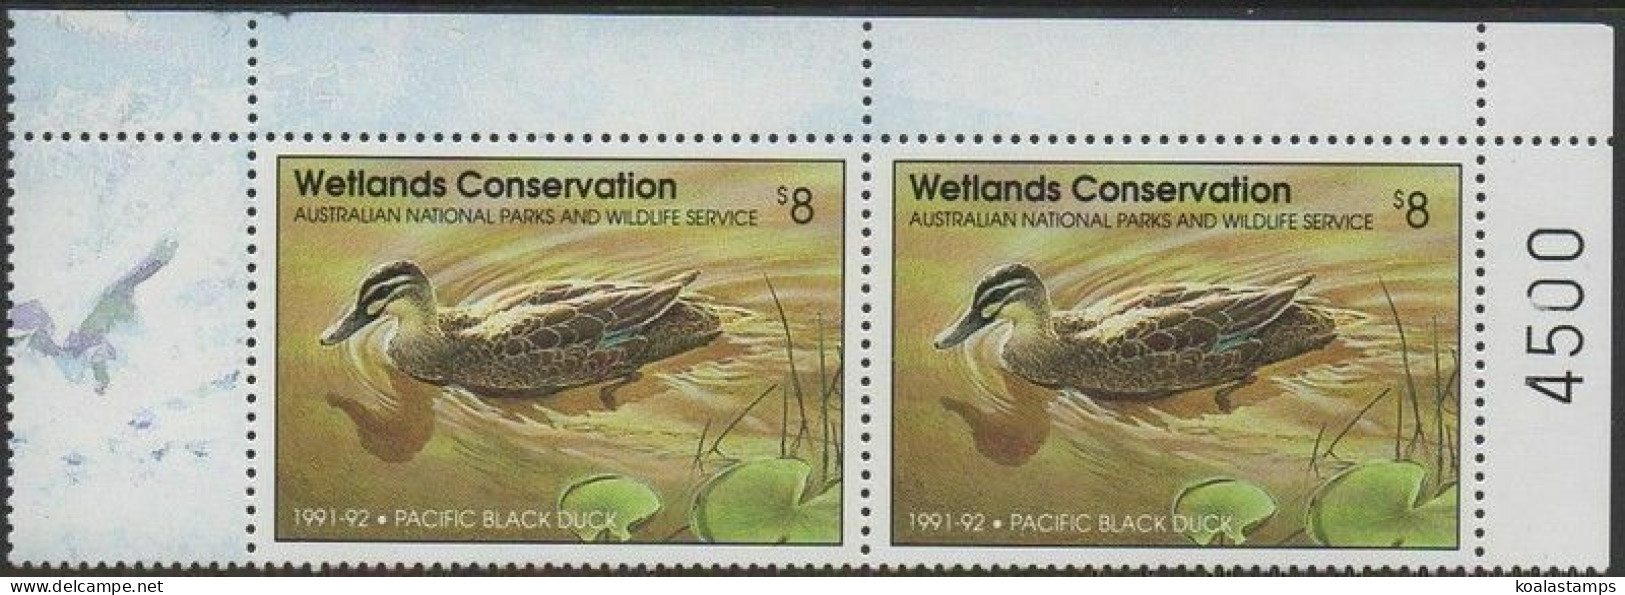 Australia Cinderella Ducks 1991 $8 Pacific Black Duck Pair MNH - Cinderelas